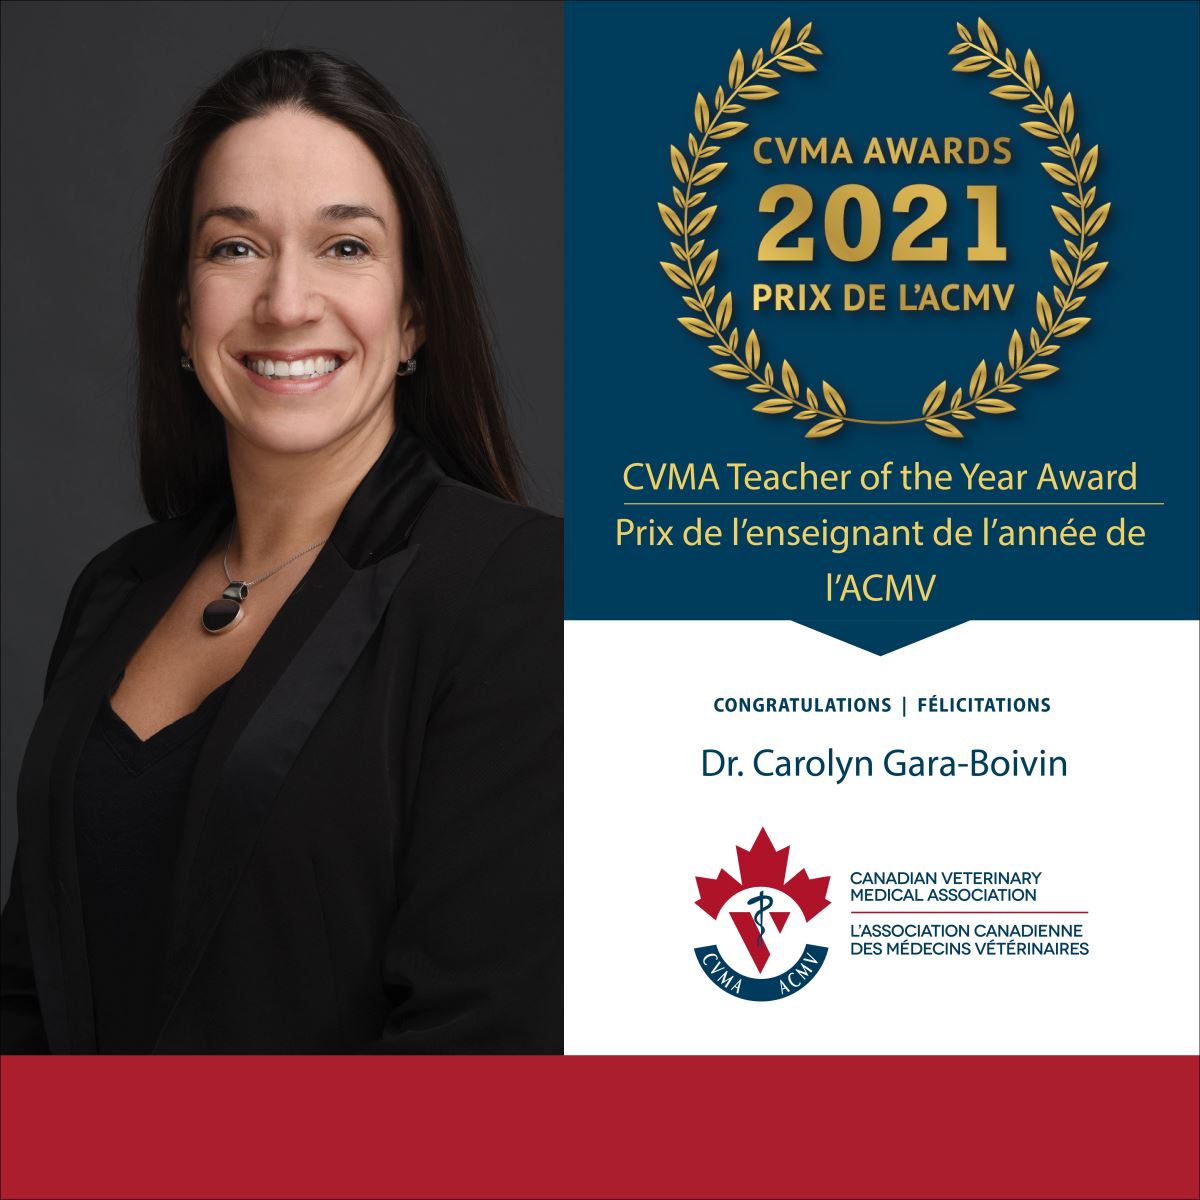 Dr. Carolyn Gara-Boivin